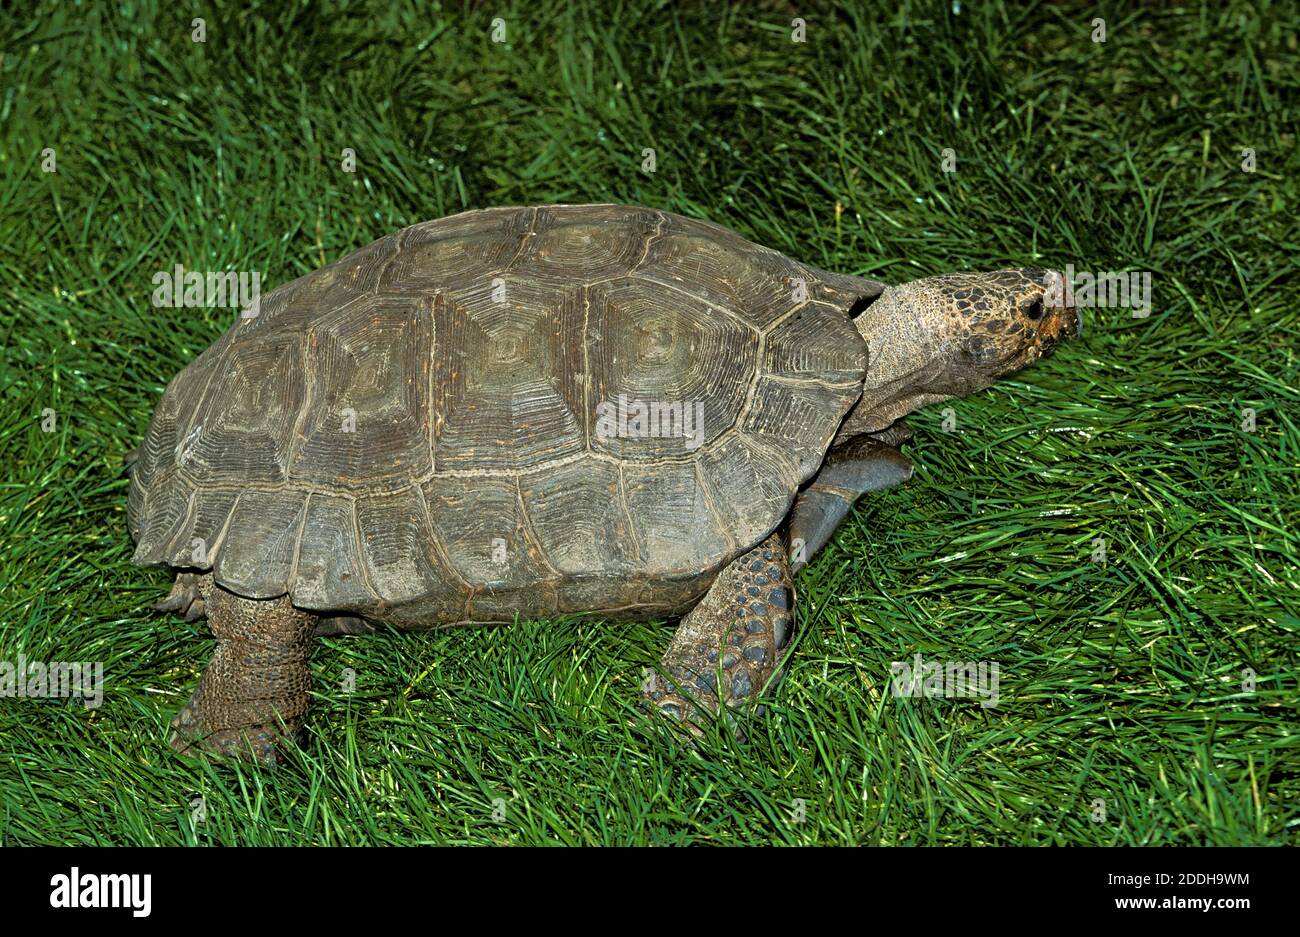 Tortoise, Adult Stock Photo